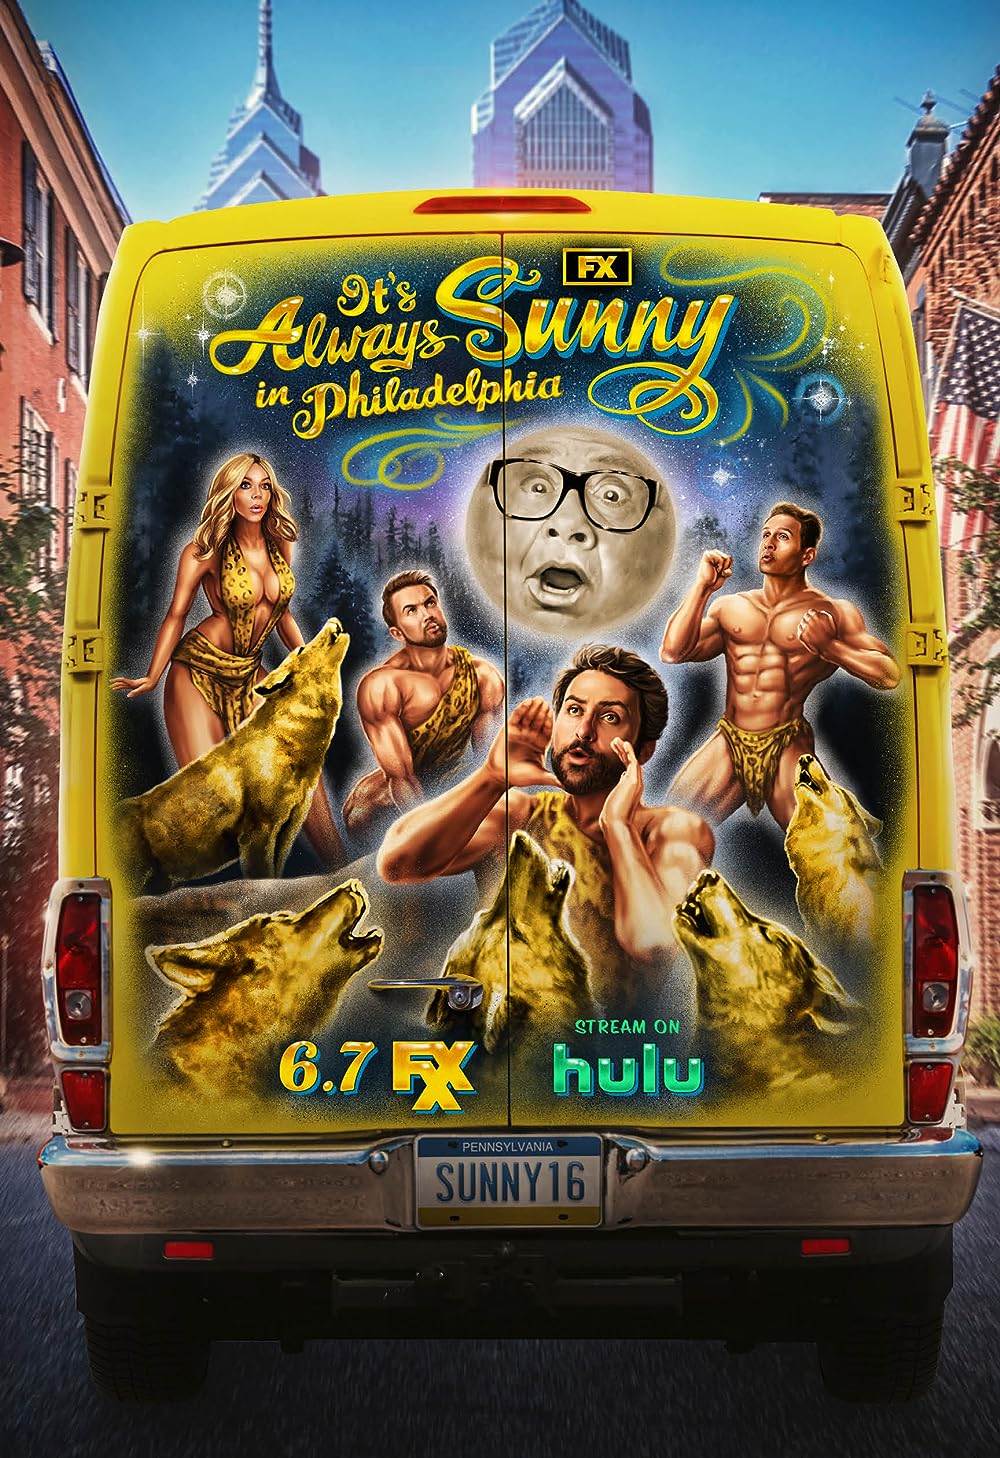 It's Always Sunny in Philadelphia comedy web series